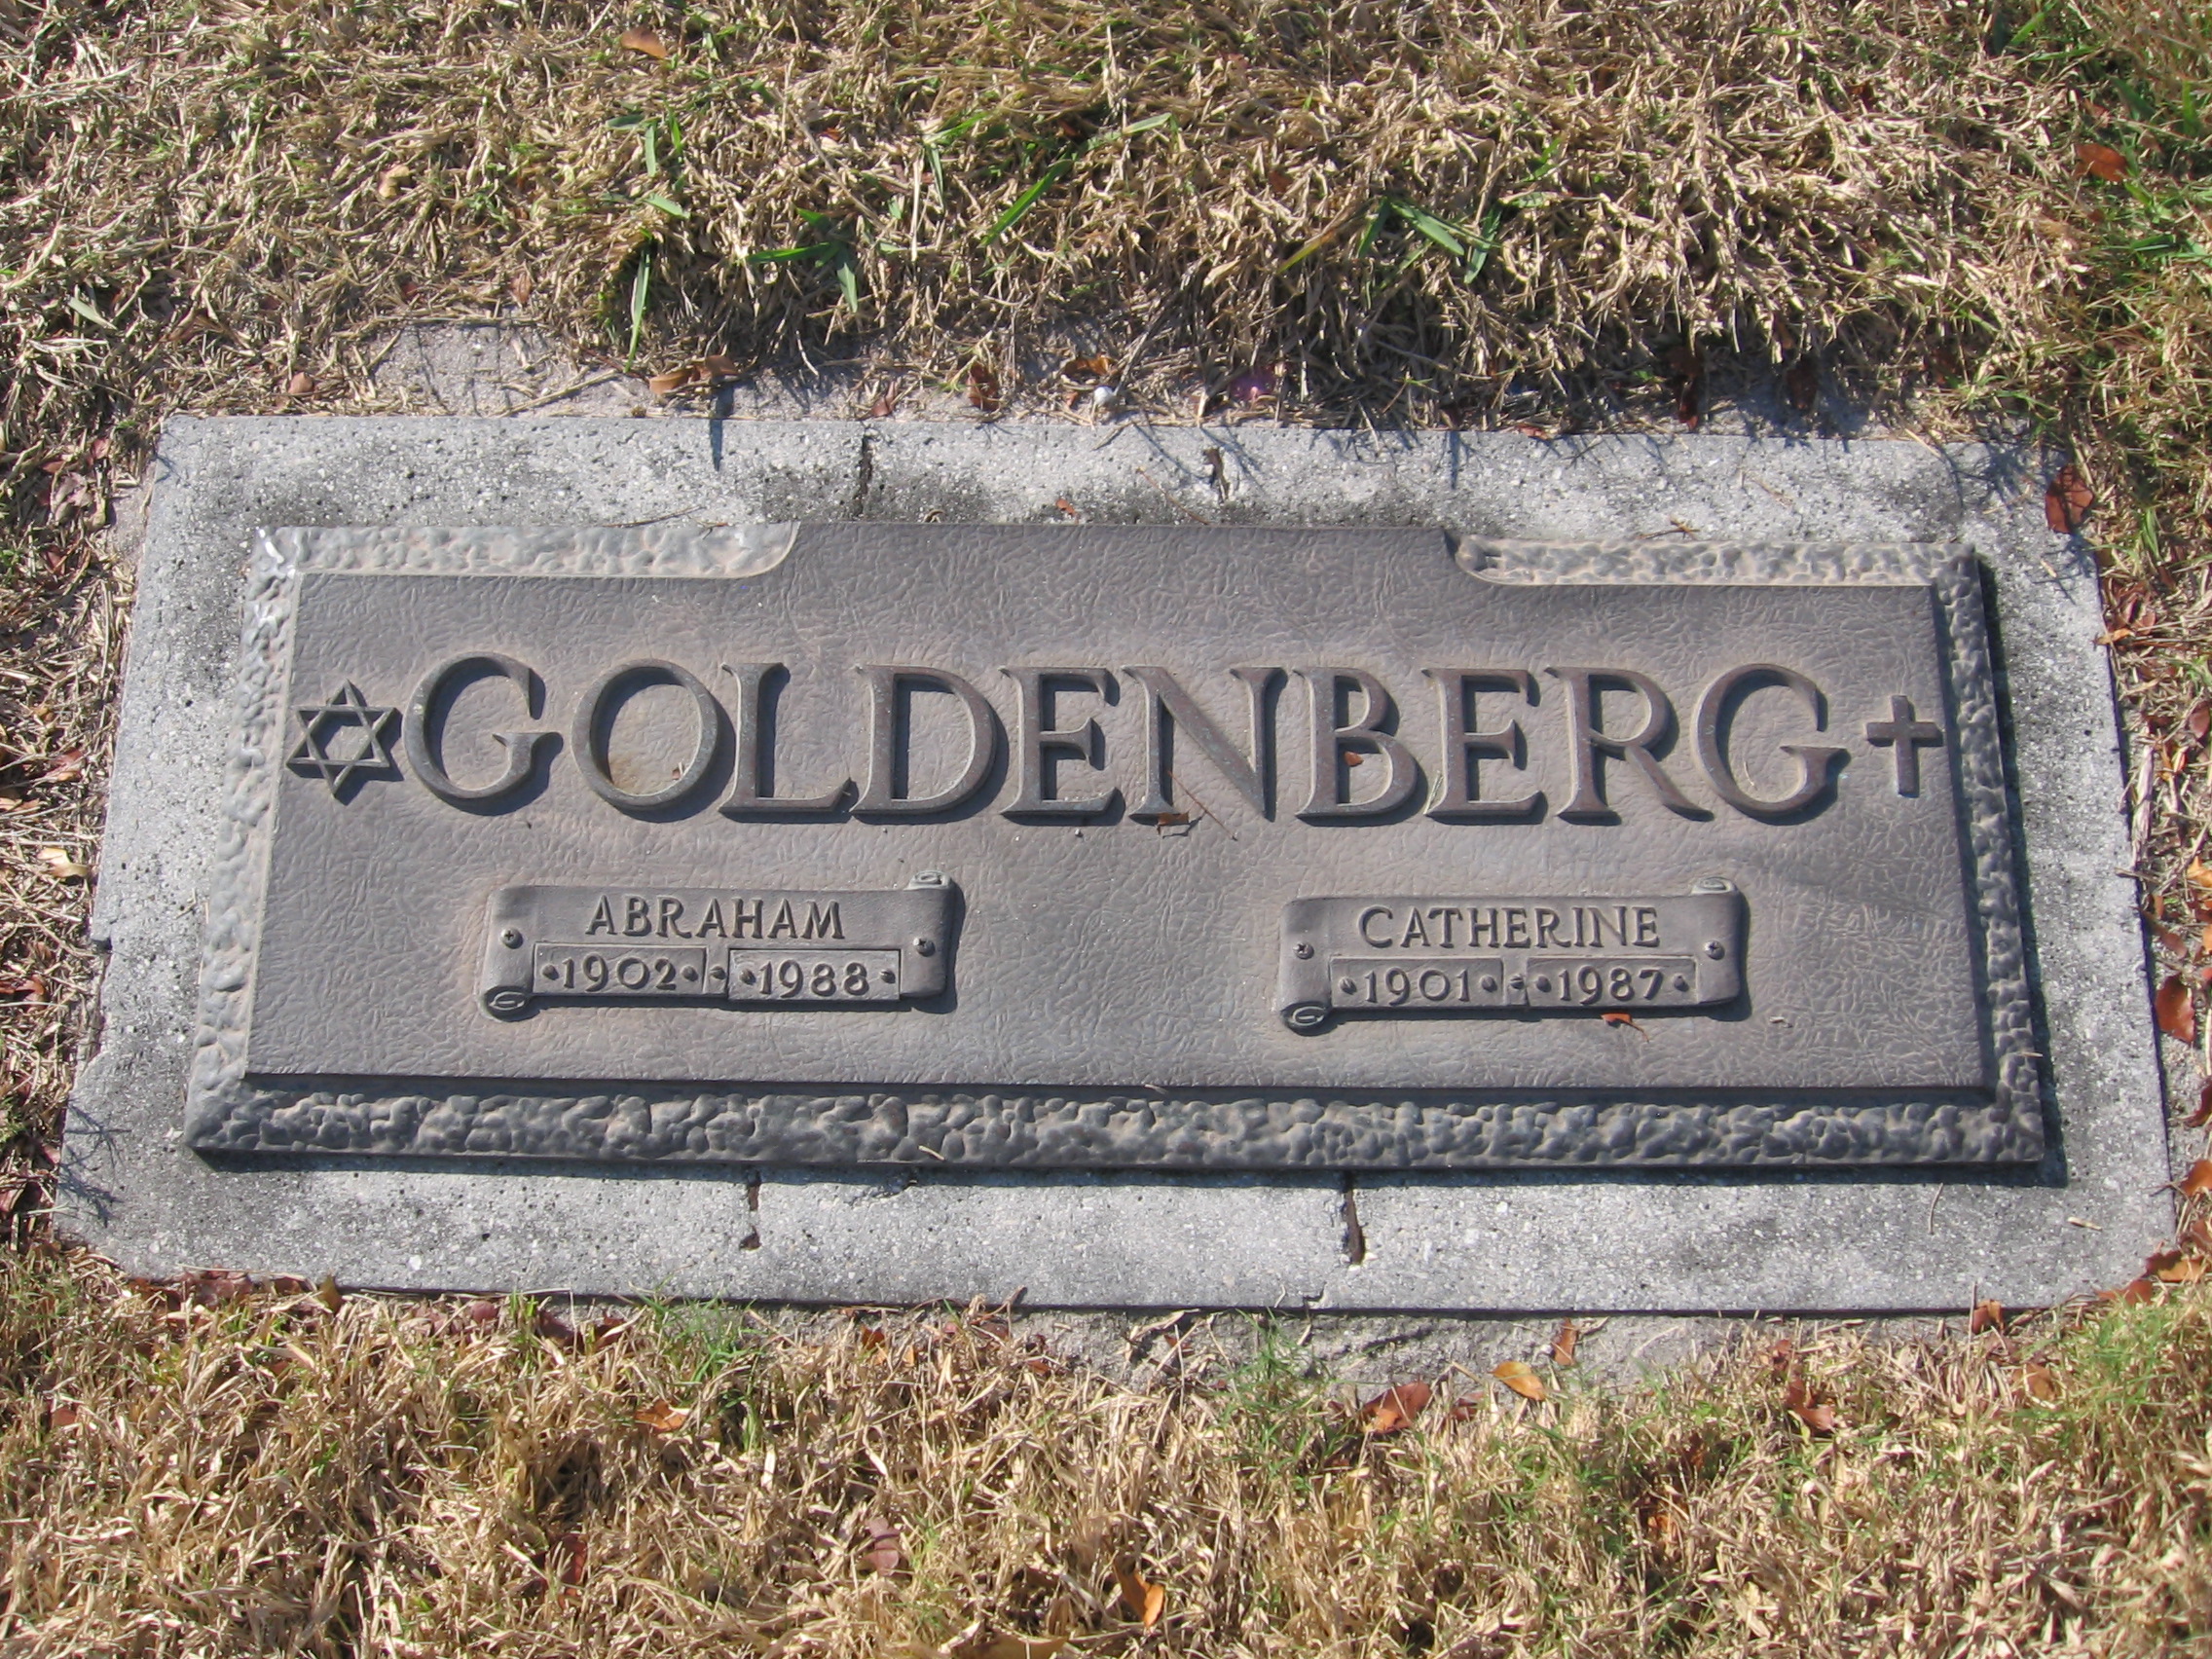 Catherine Goldenberg